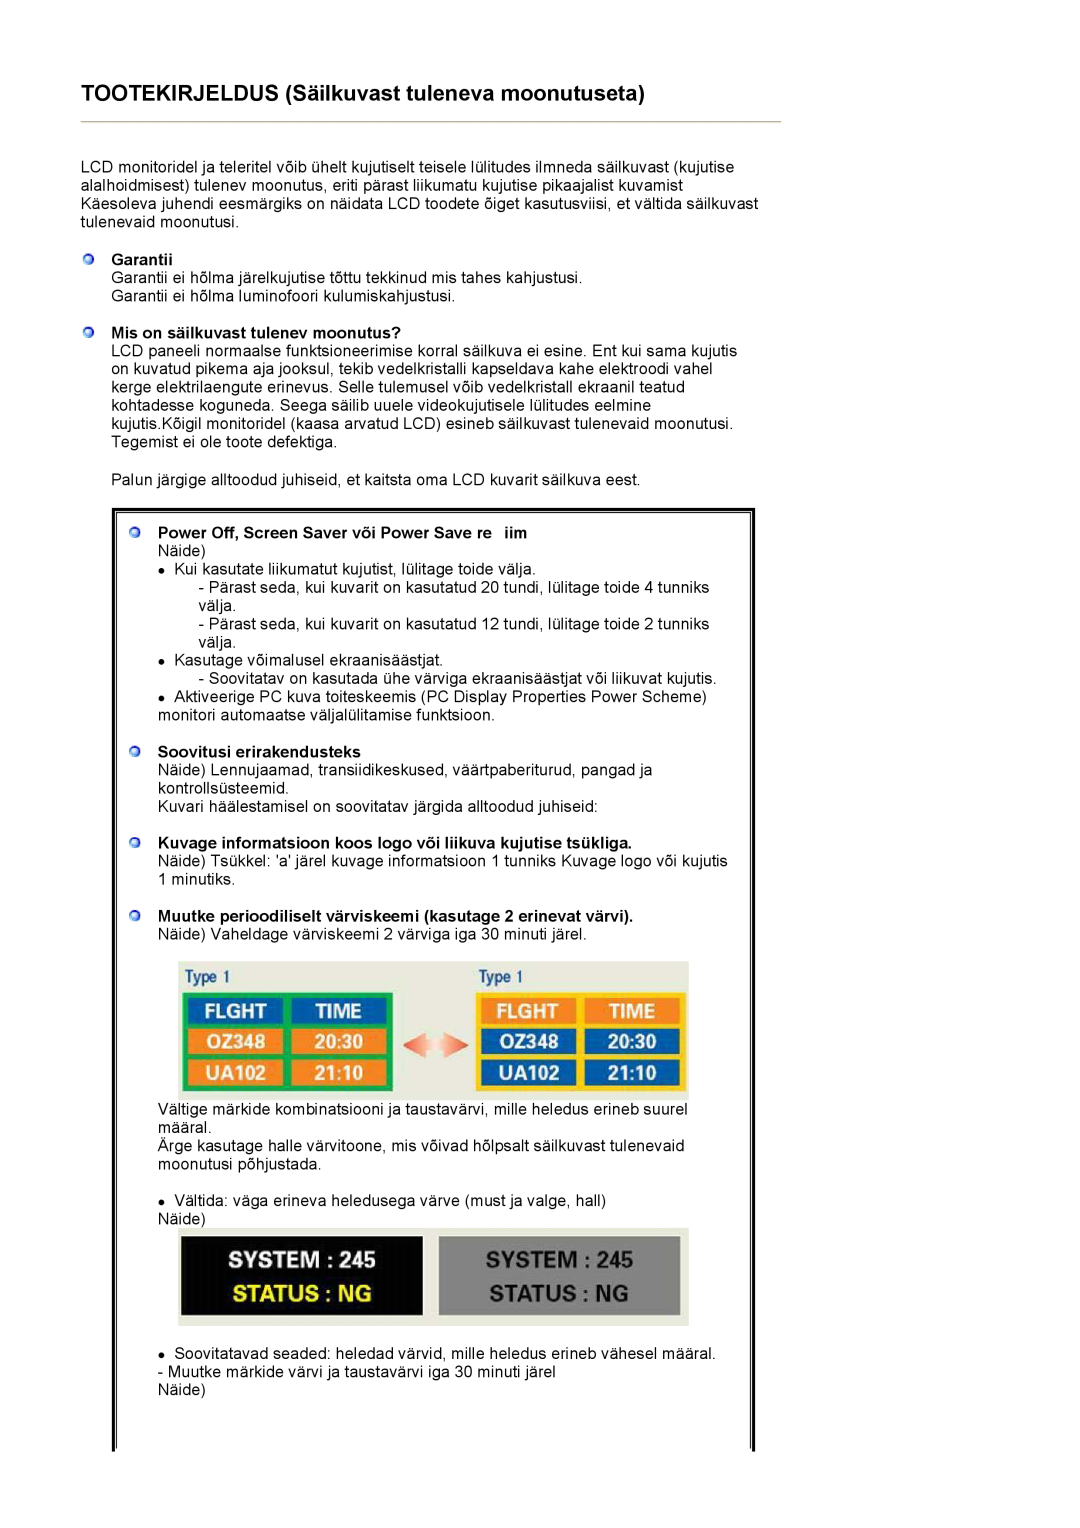 Samsung LS27HUBCB/EDC manual Garantii, Mis on säilkuvast tulenev moonutus?, Power Off, Screen Saver või Power Save re iim 